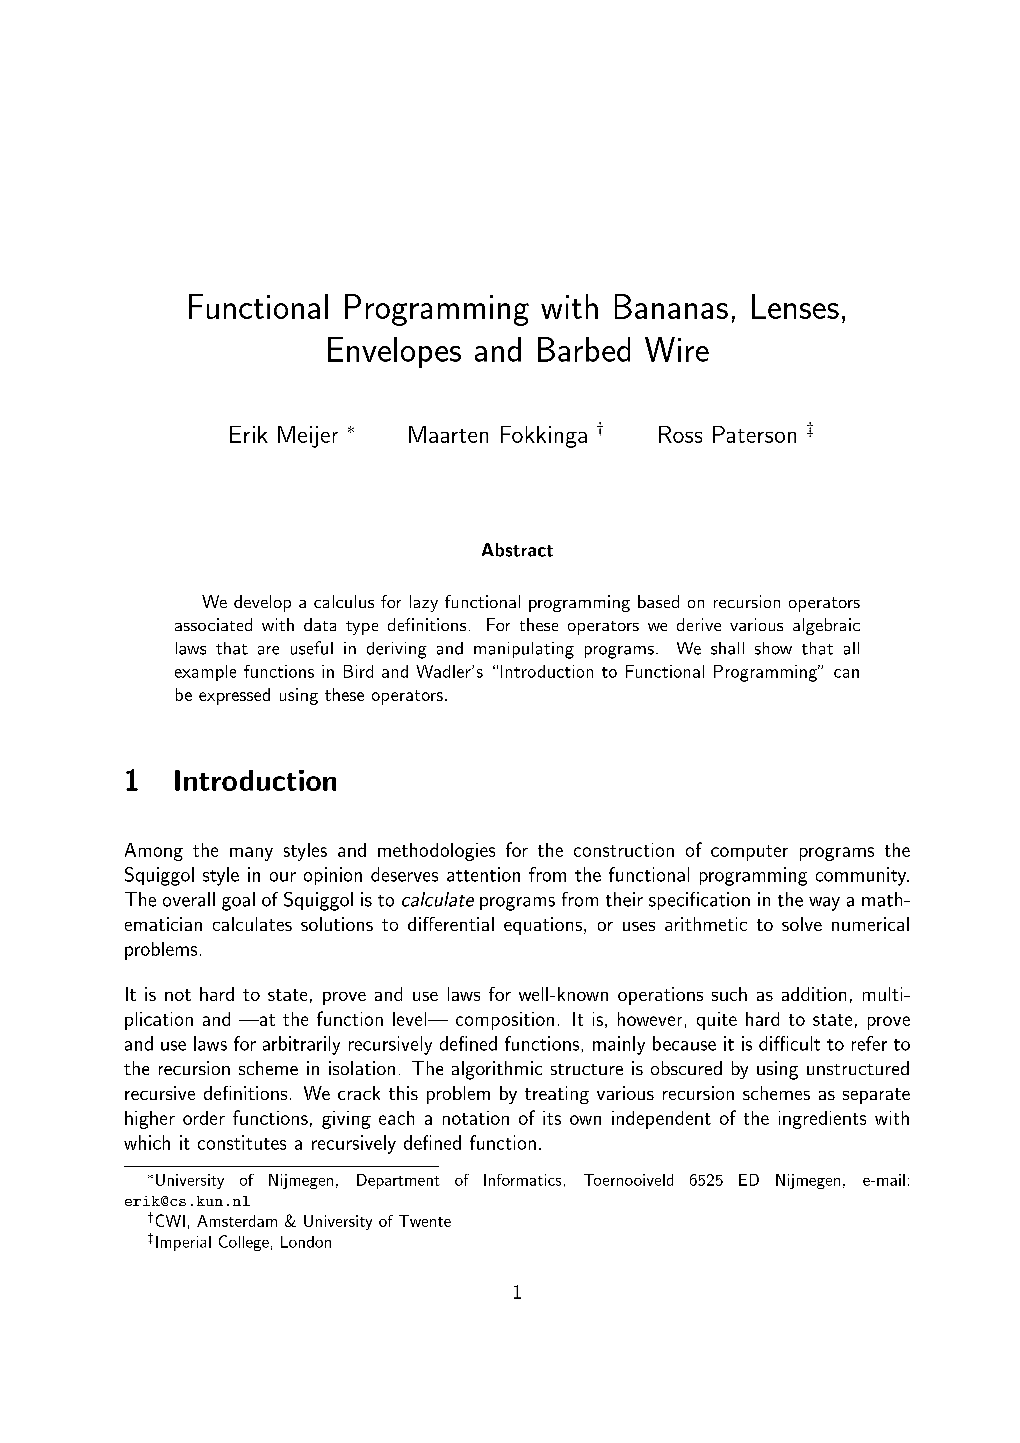 Functional Programming with Bananas, Lenses, Envelopes